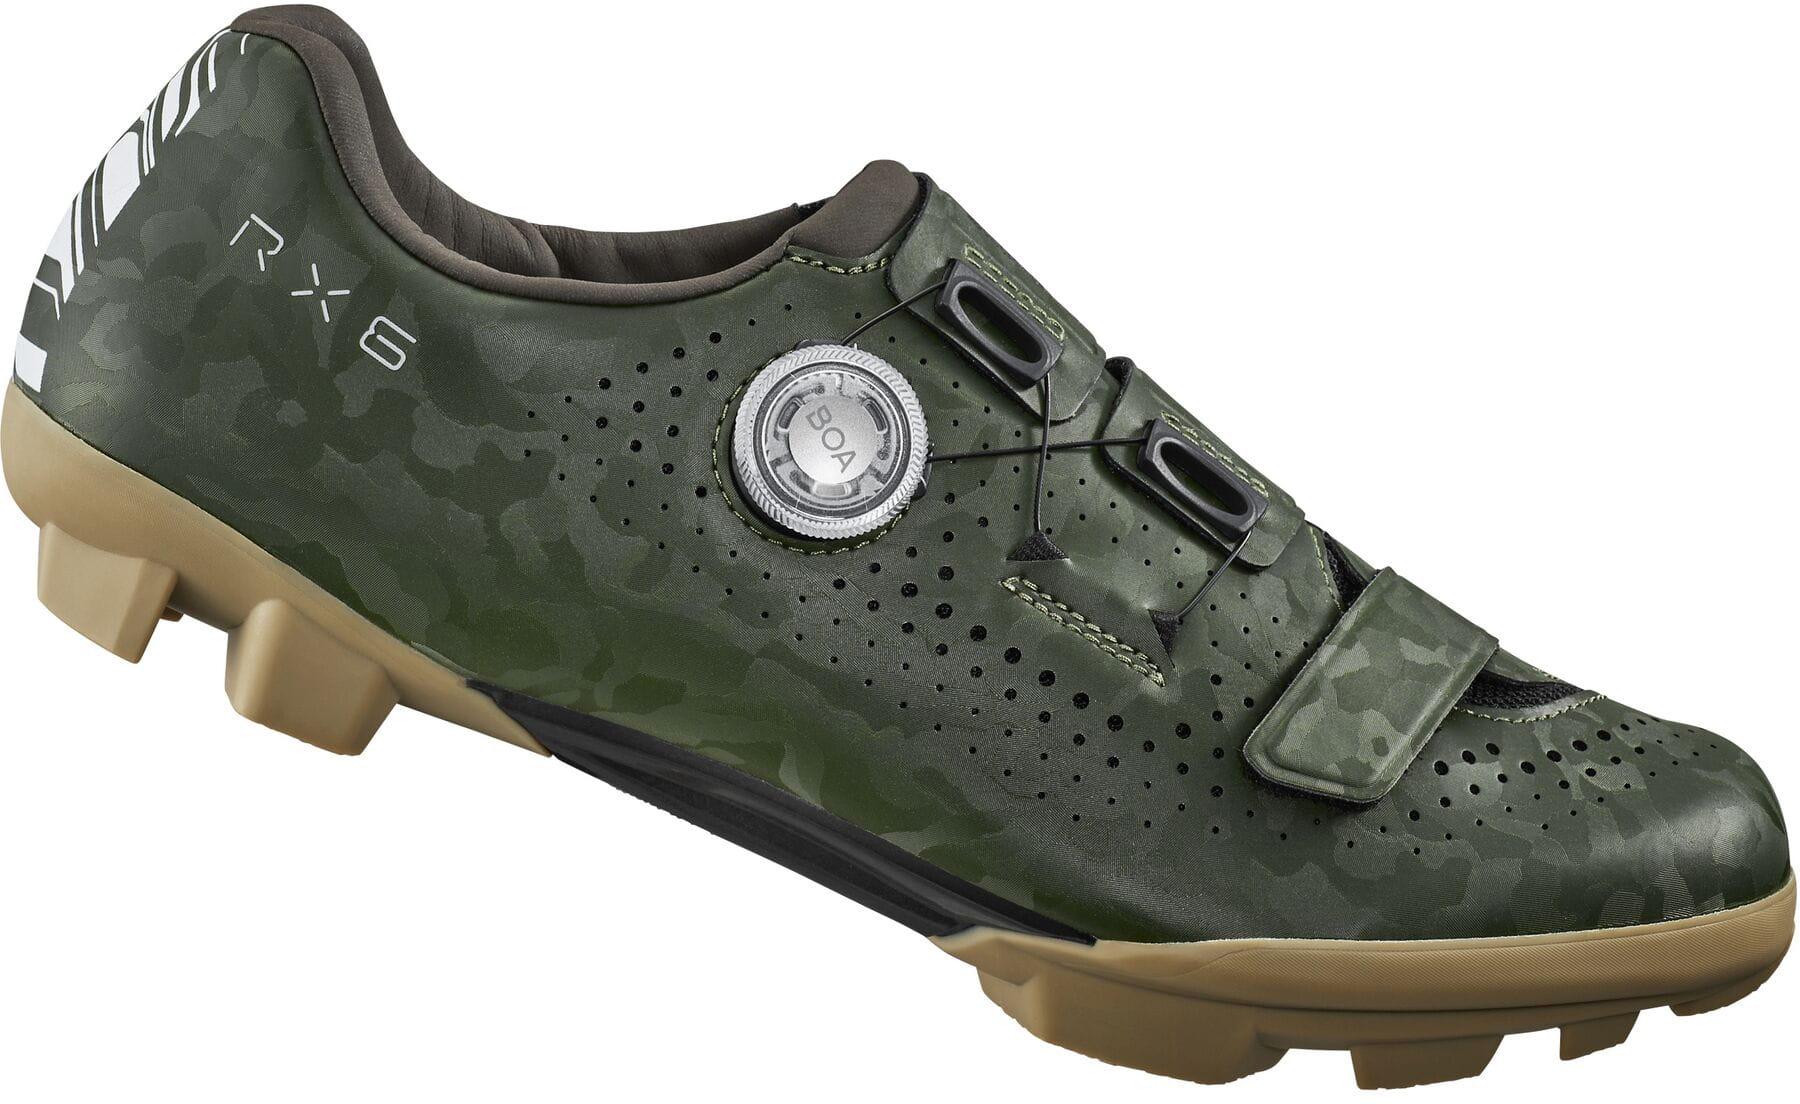 Shimano Rx600 Gravel Shoes - Green